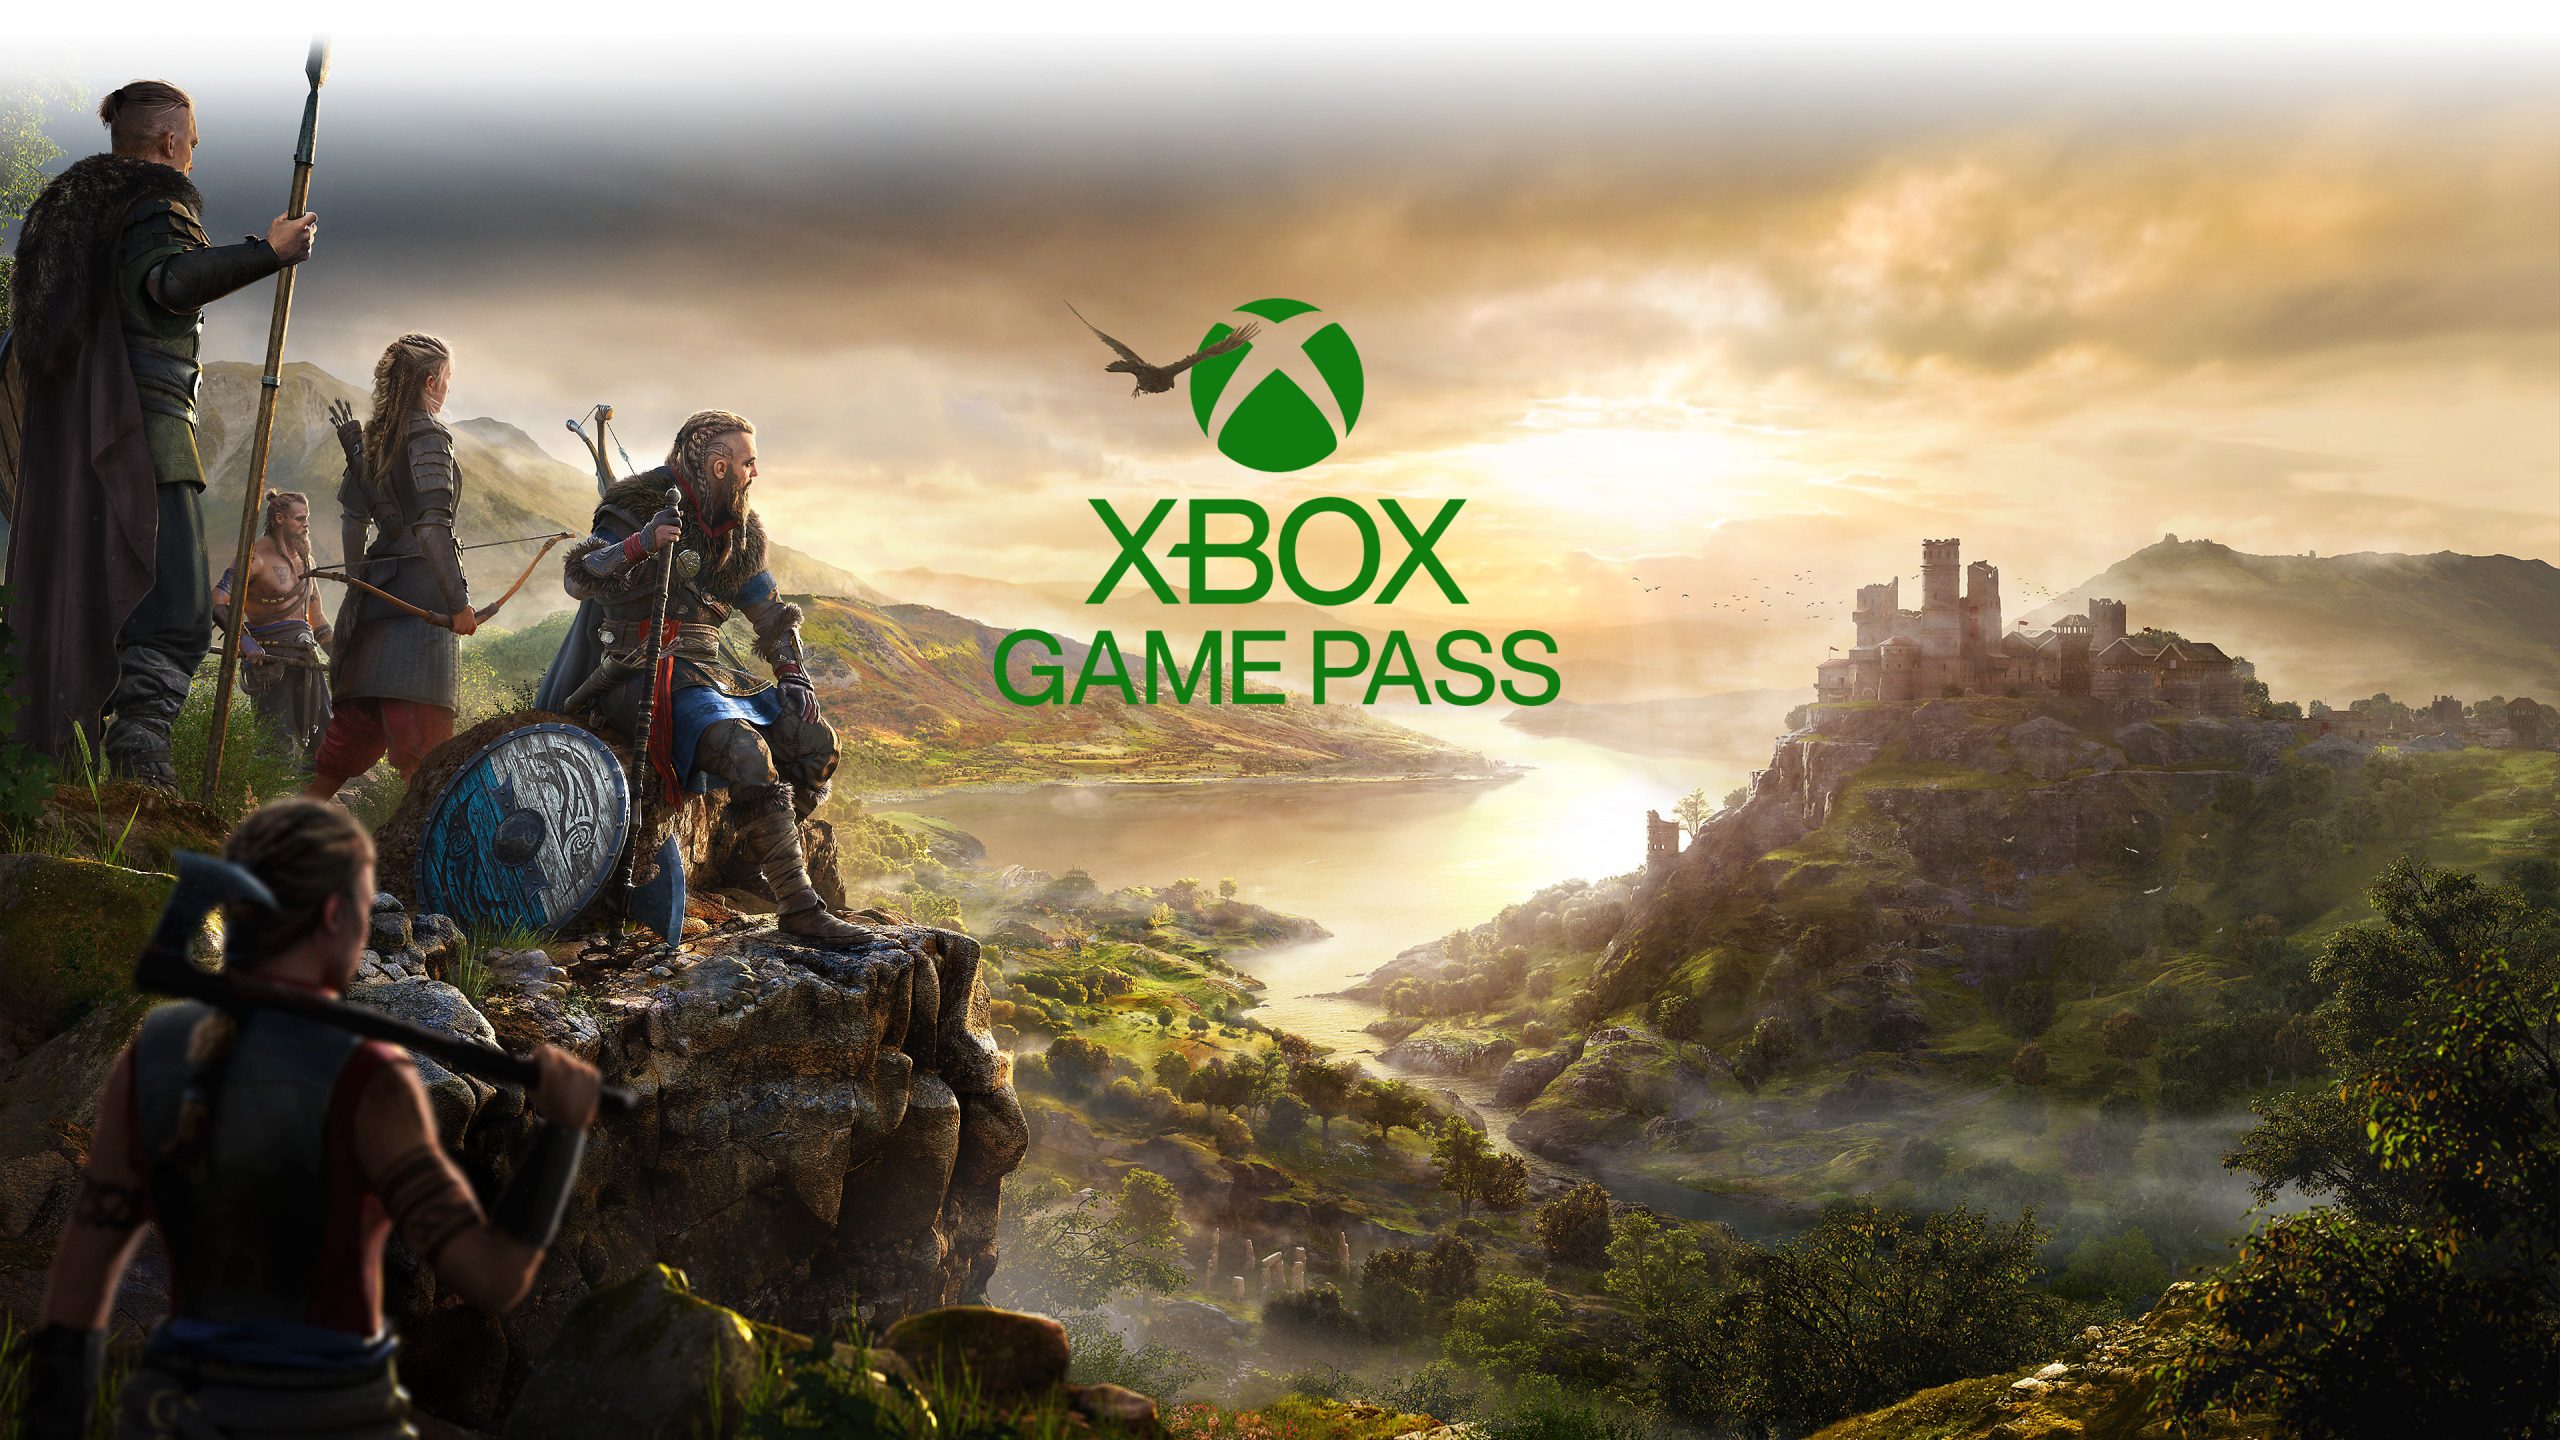 Assassins Creed Valhalla para Xbox One Ubisoft